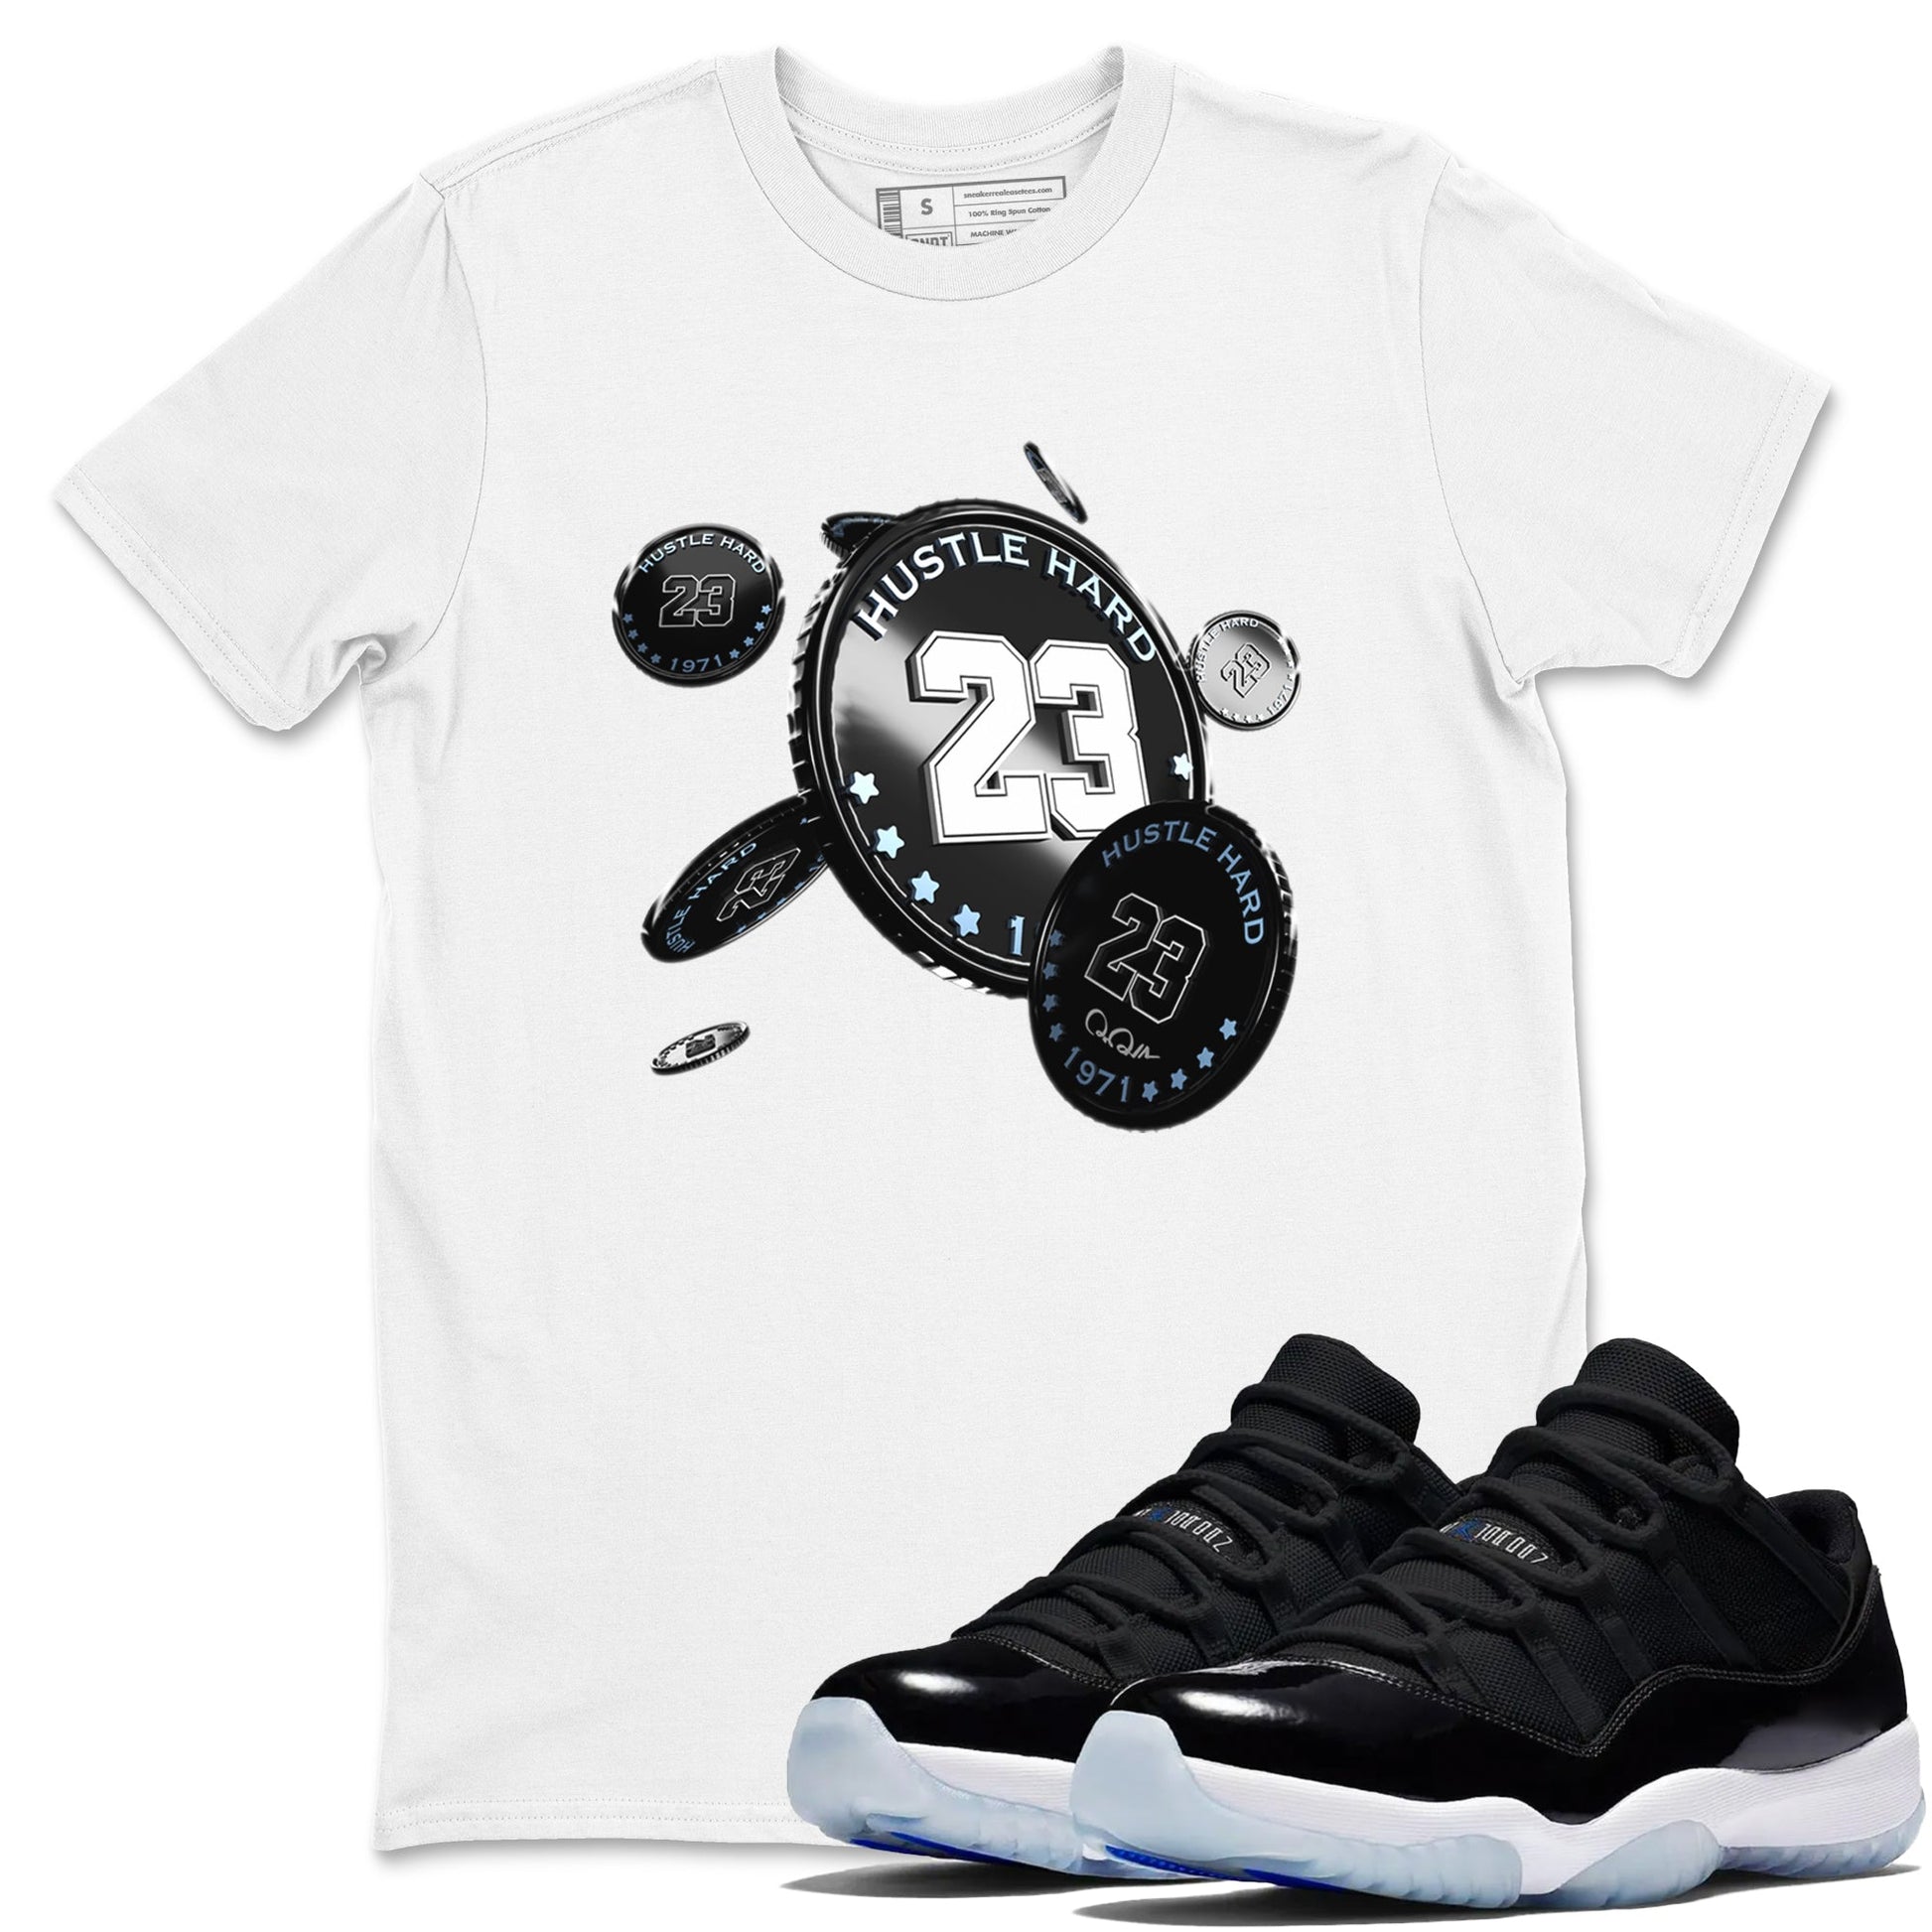 11s Black and Varsity Royal shirt to match jordans Coin Drop sneaker tees Air Jordan 11 Black/Varsity Royal SNRT Sneaker Release Tees Unisex White 1 T-Shirt